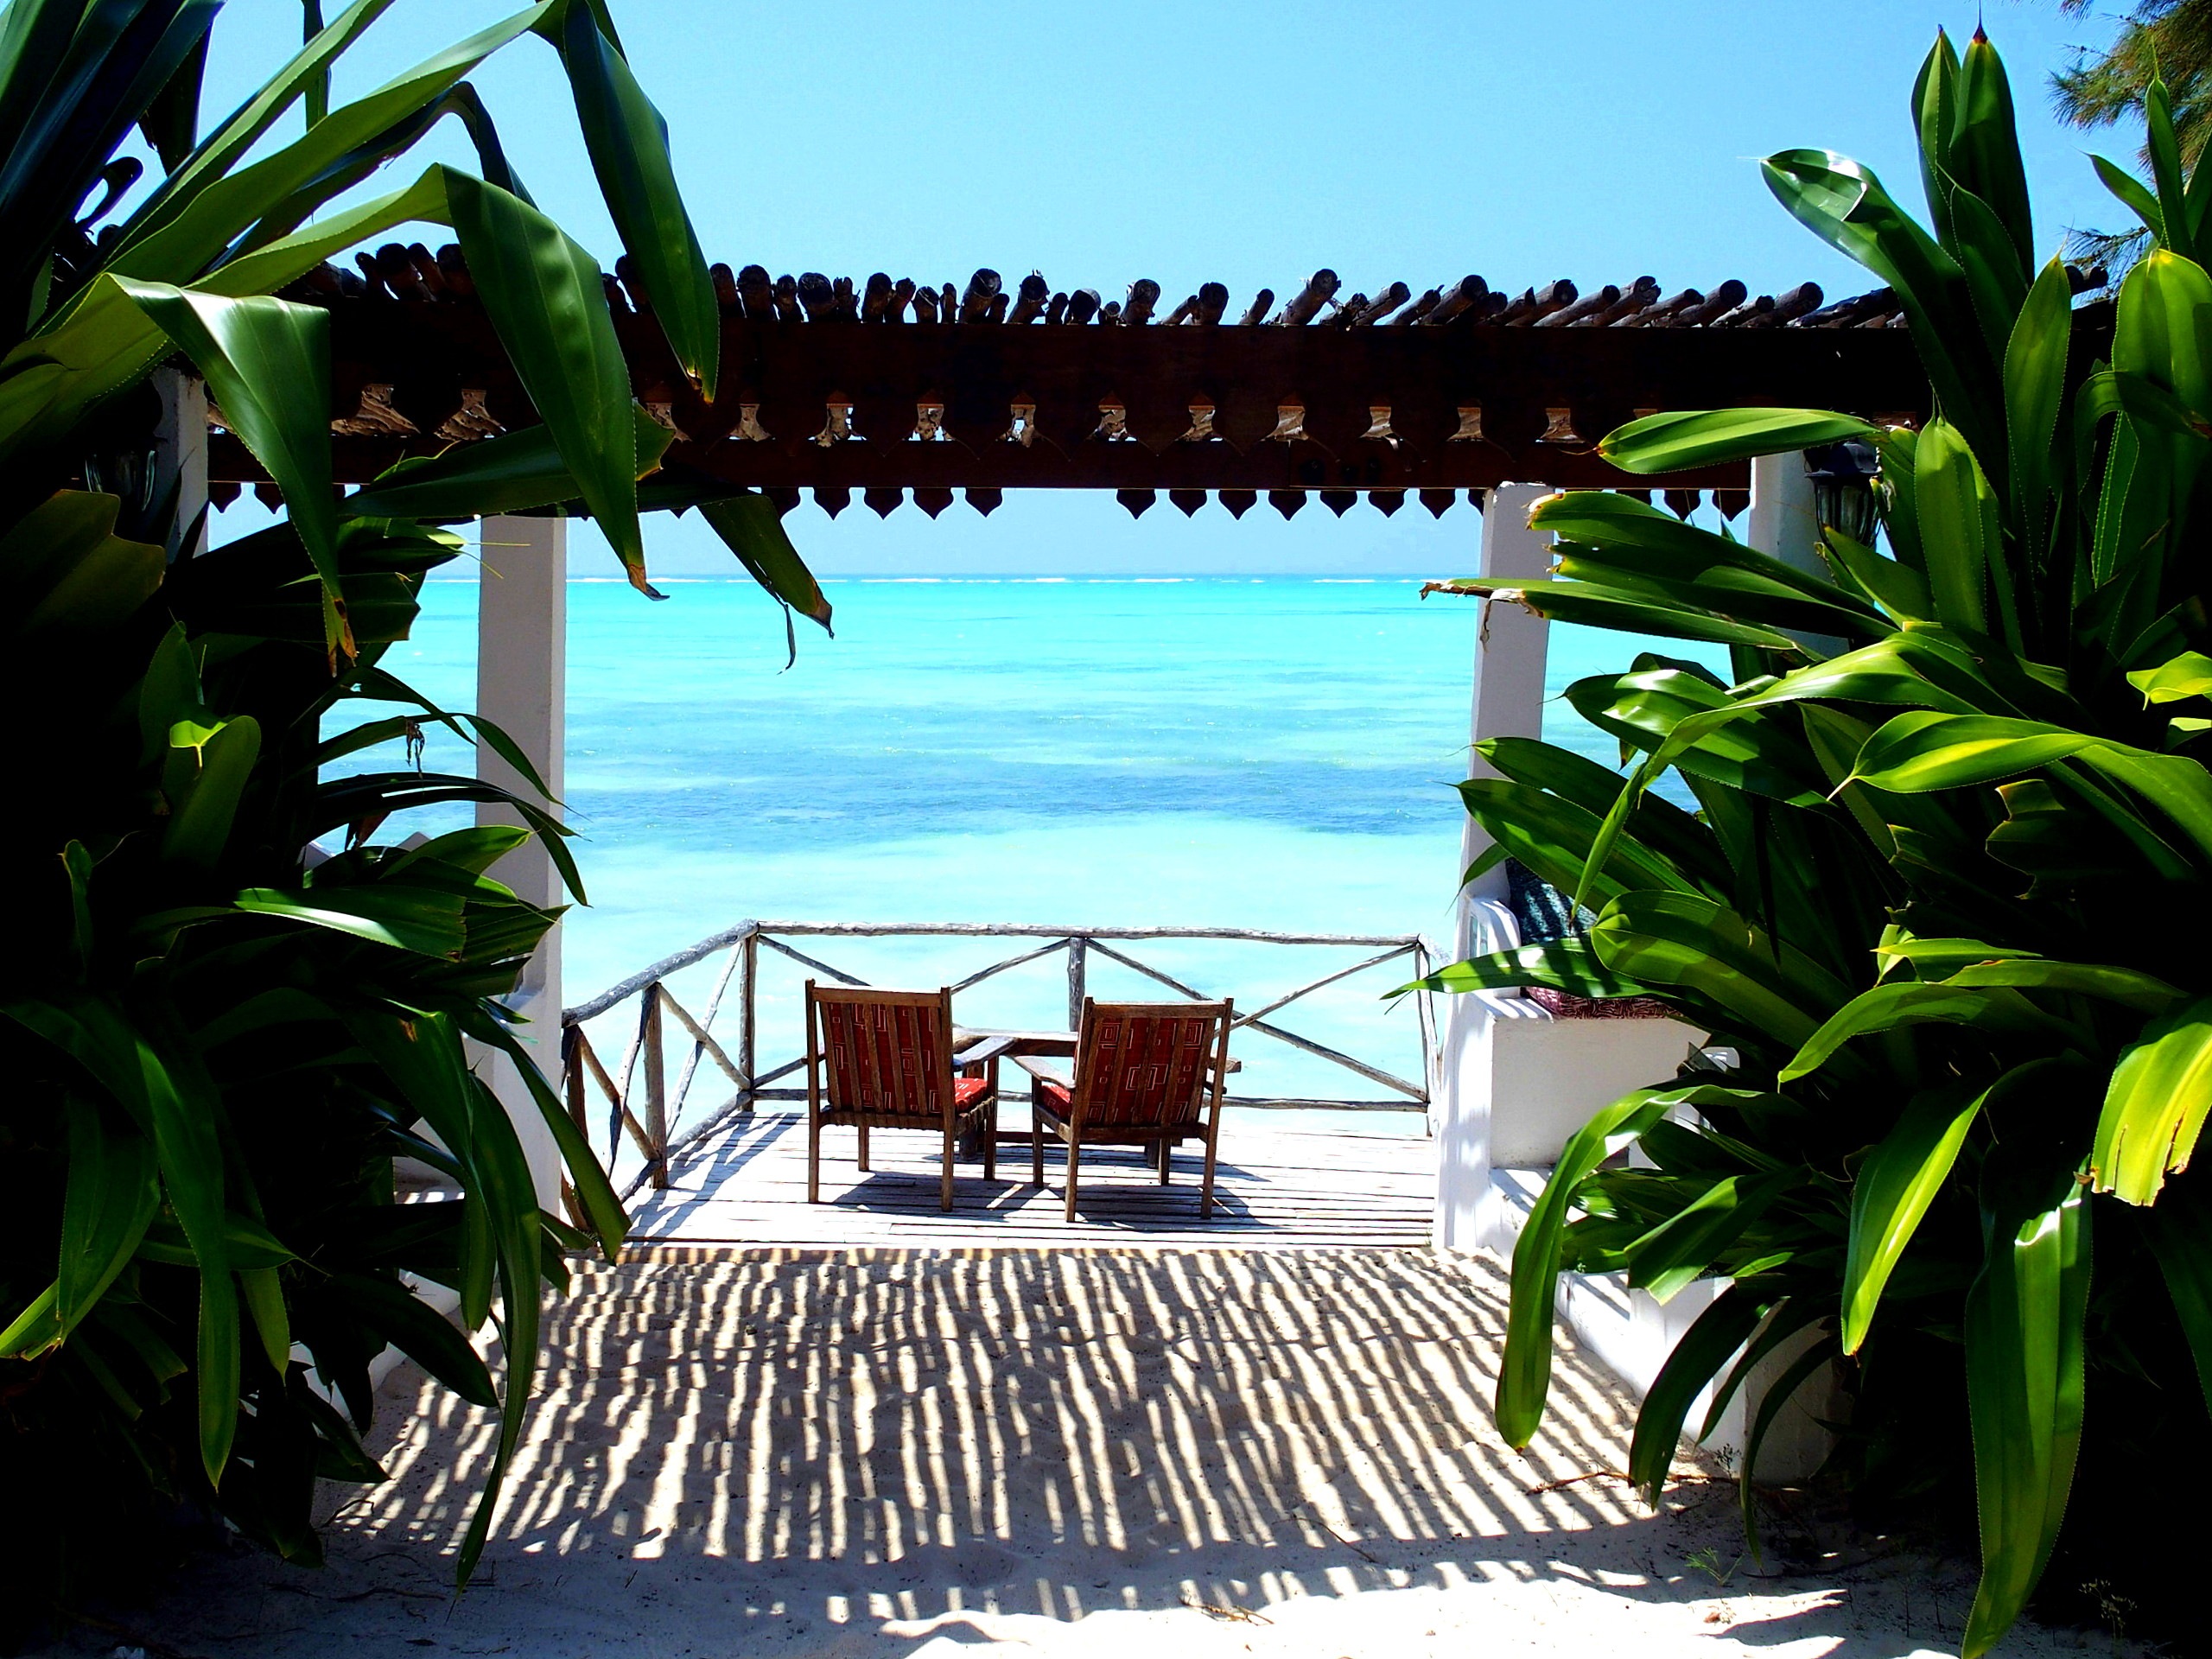 Hâvre de paix Hotel Seasons lodge Pongwe Zanzibar